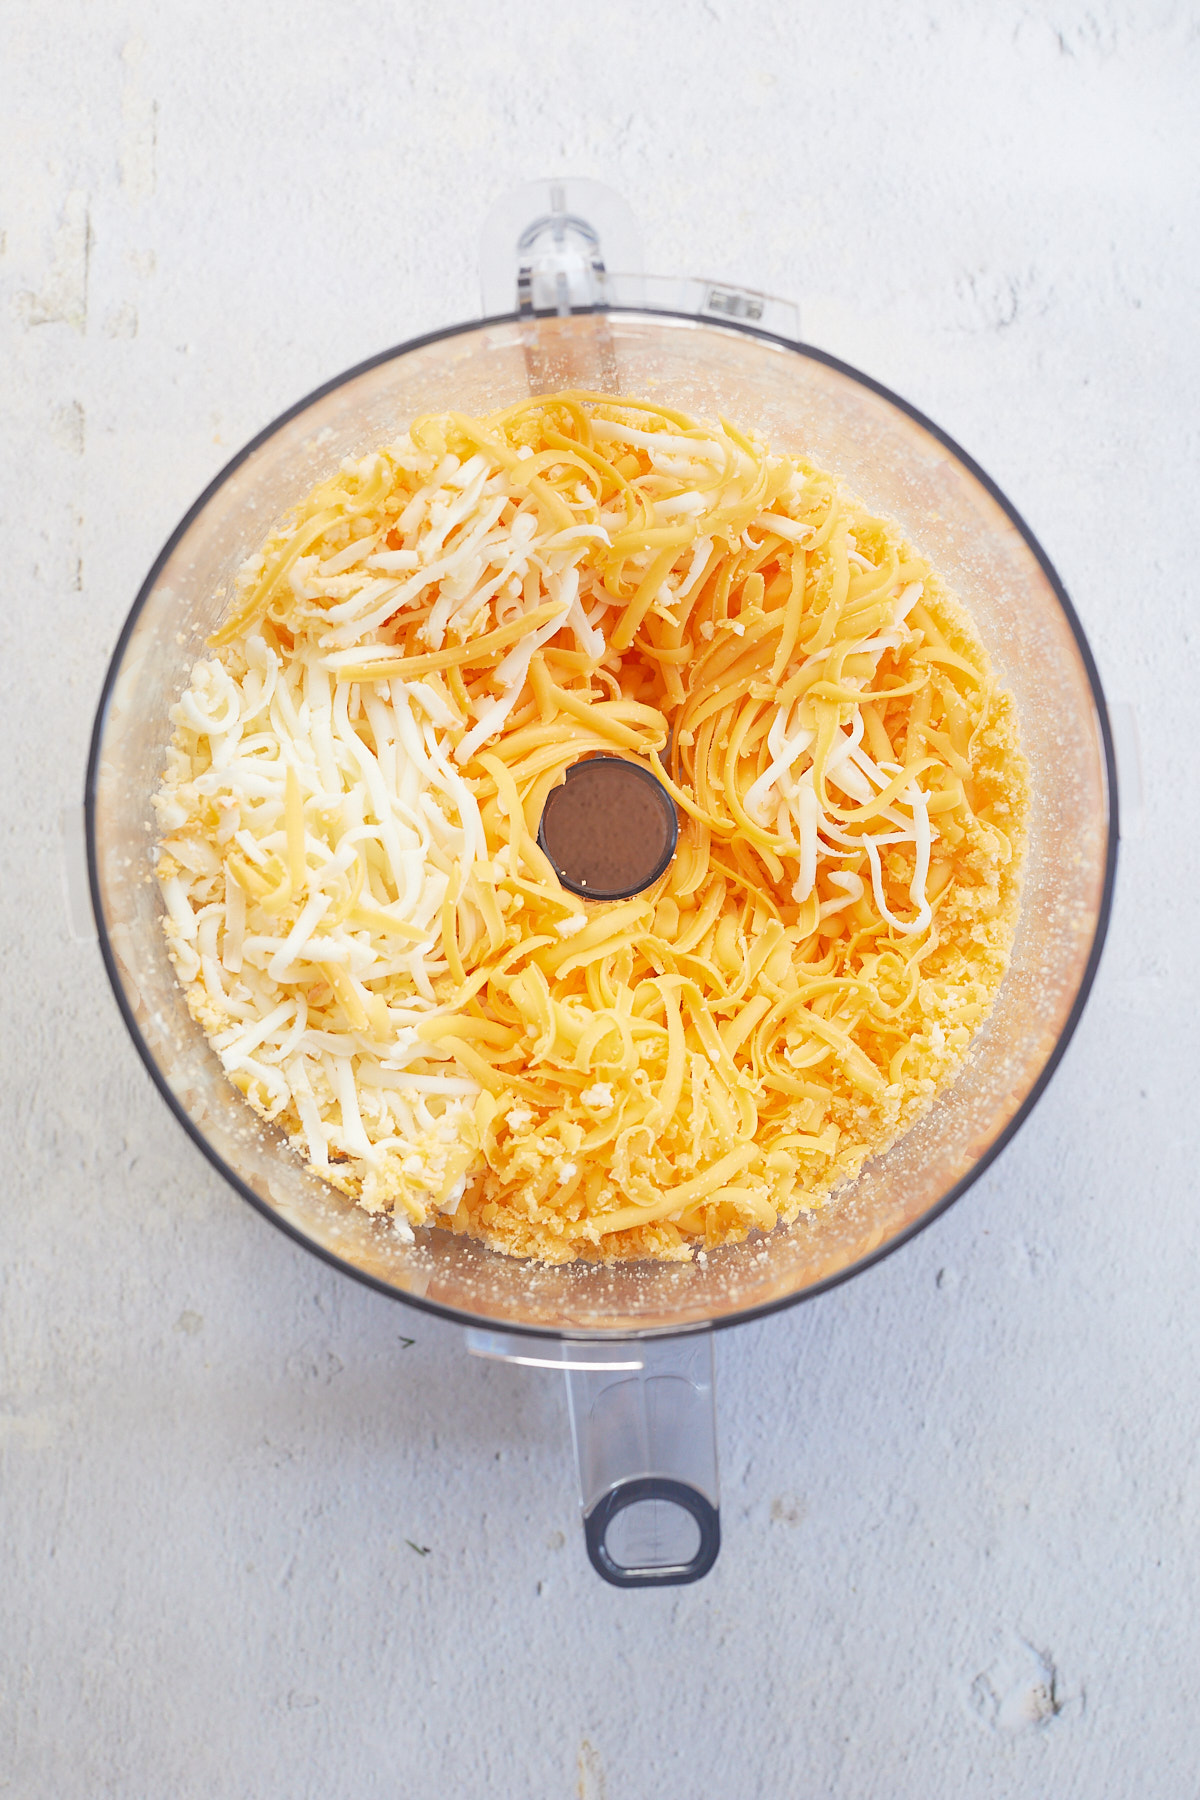 shredded cheese in a food processor